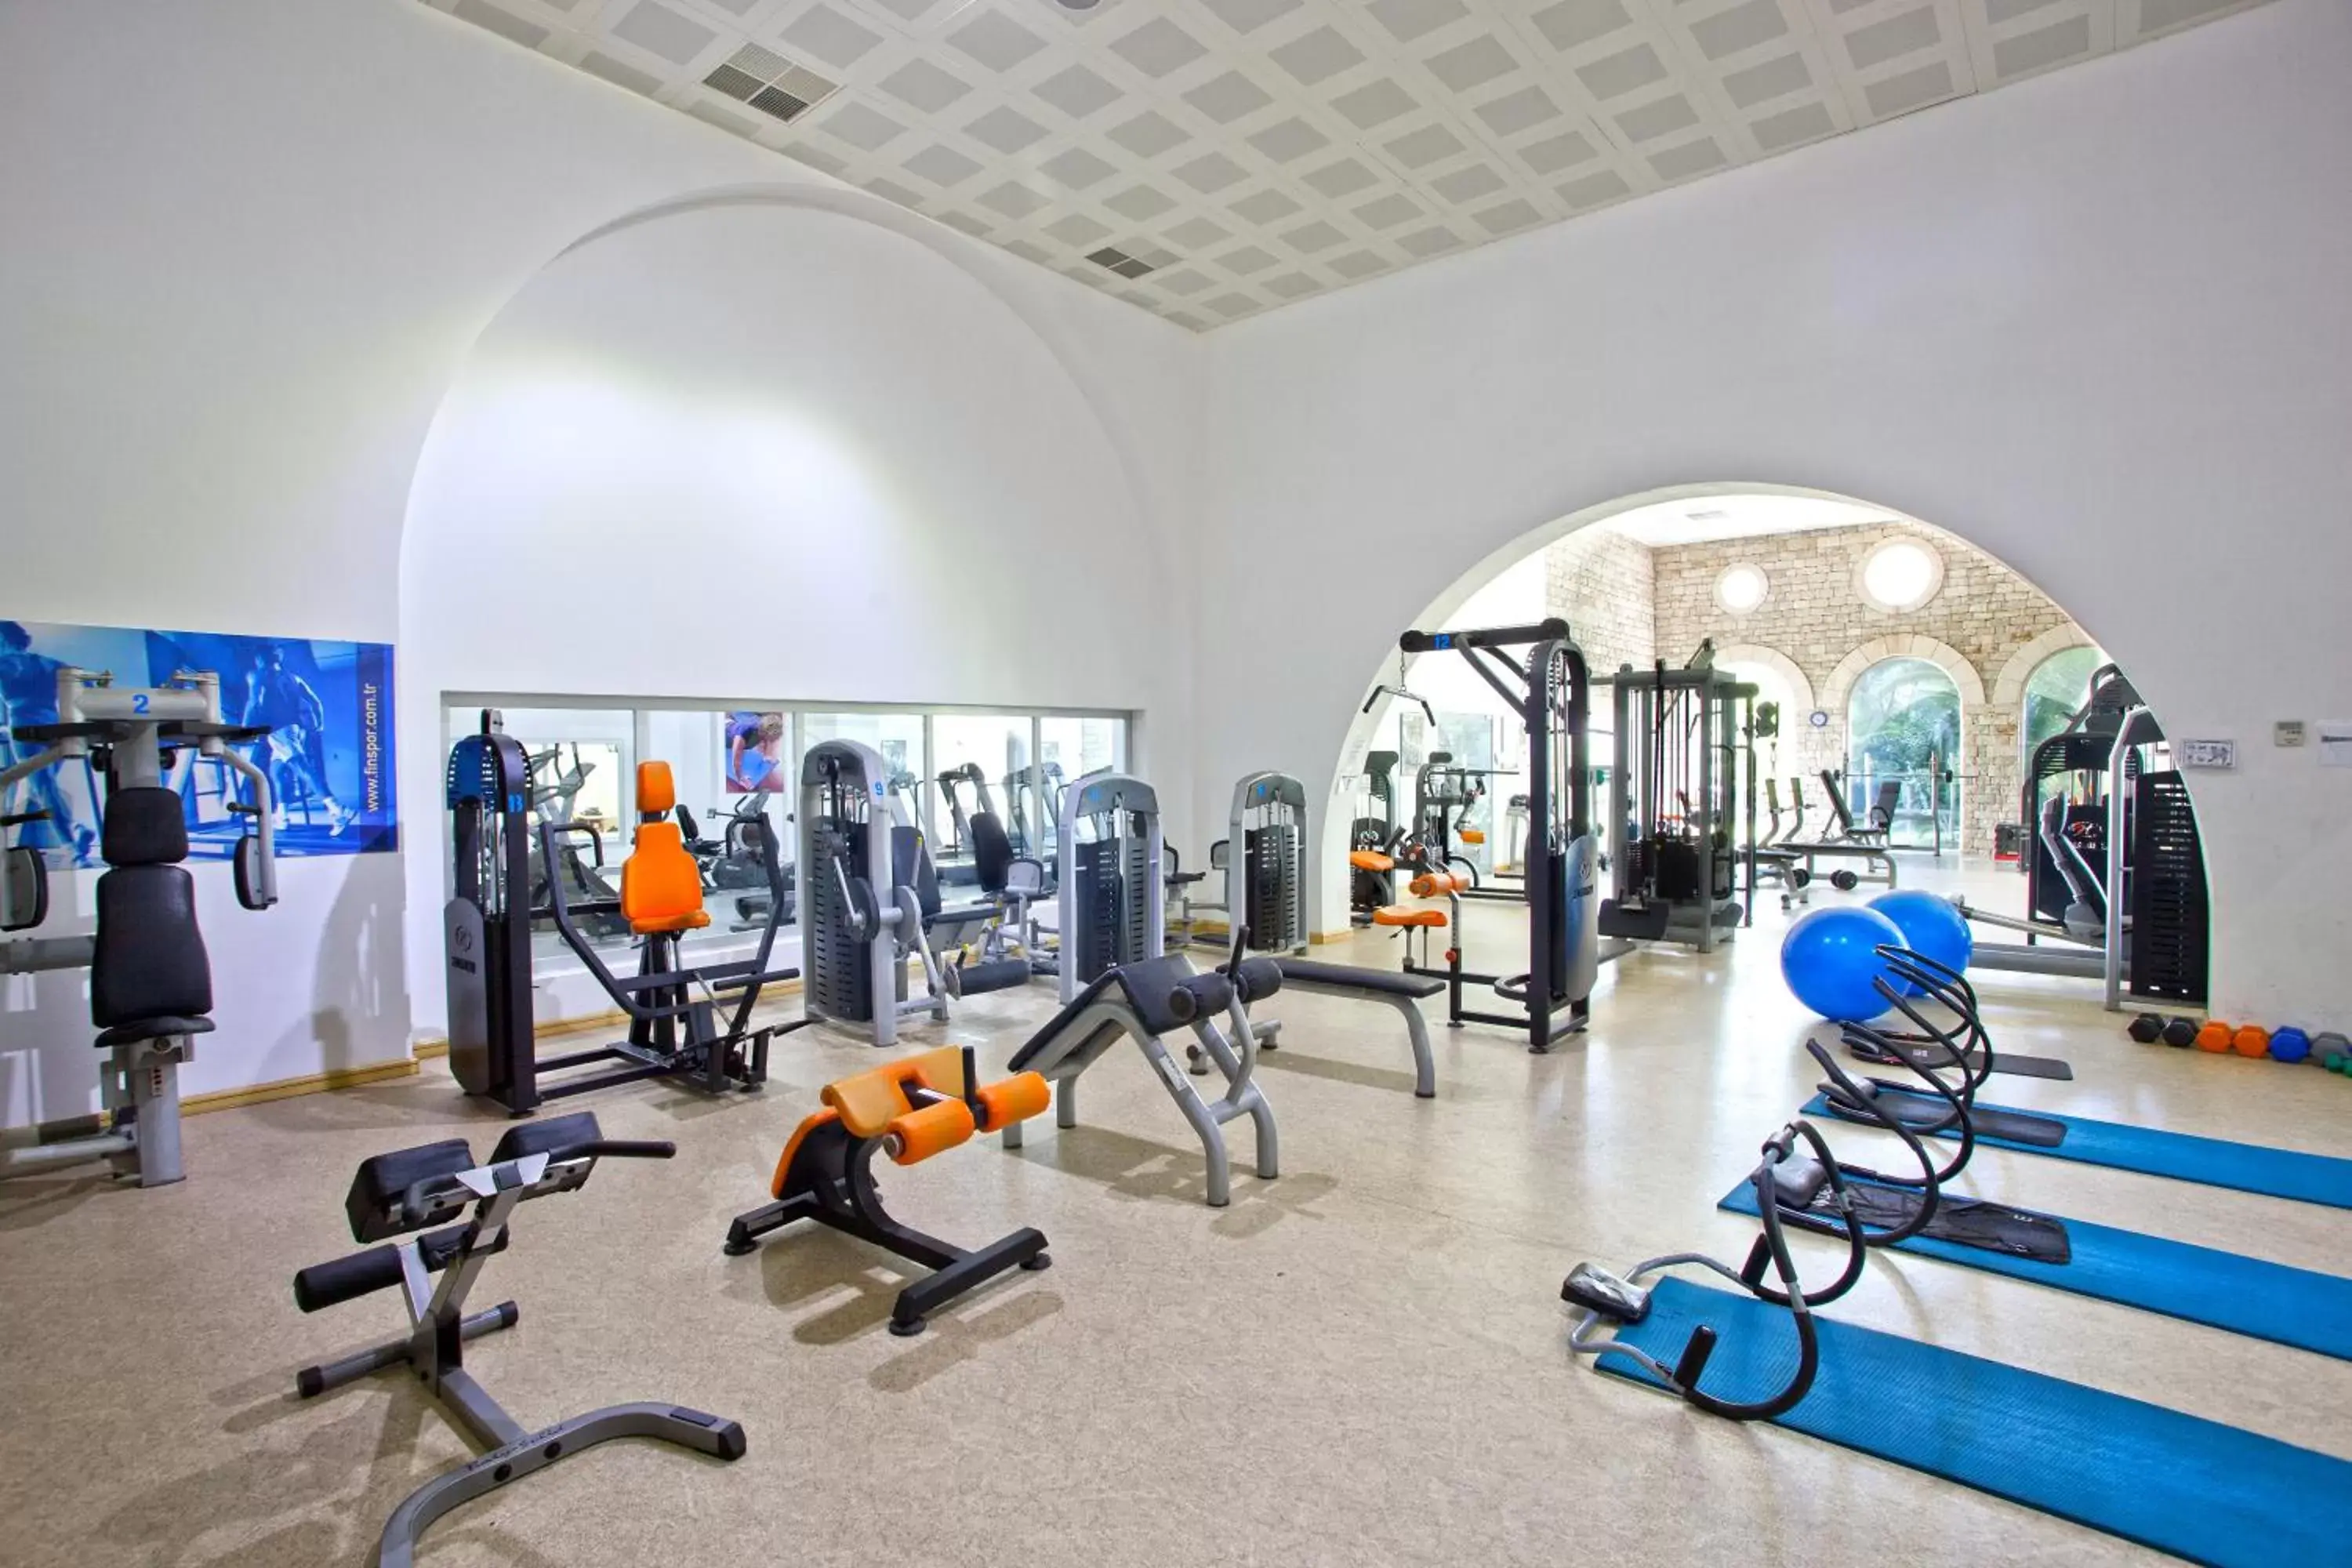 Fitness centre/facilities, Fitness Center/Facilities in Salmakis Resort & Spa